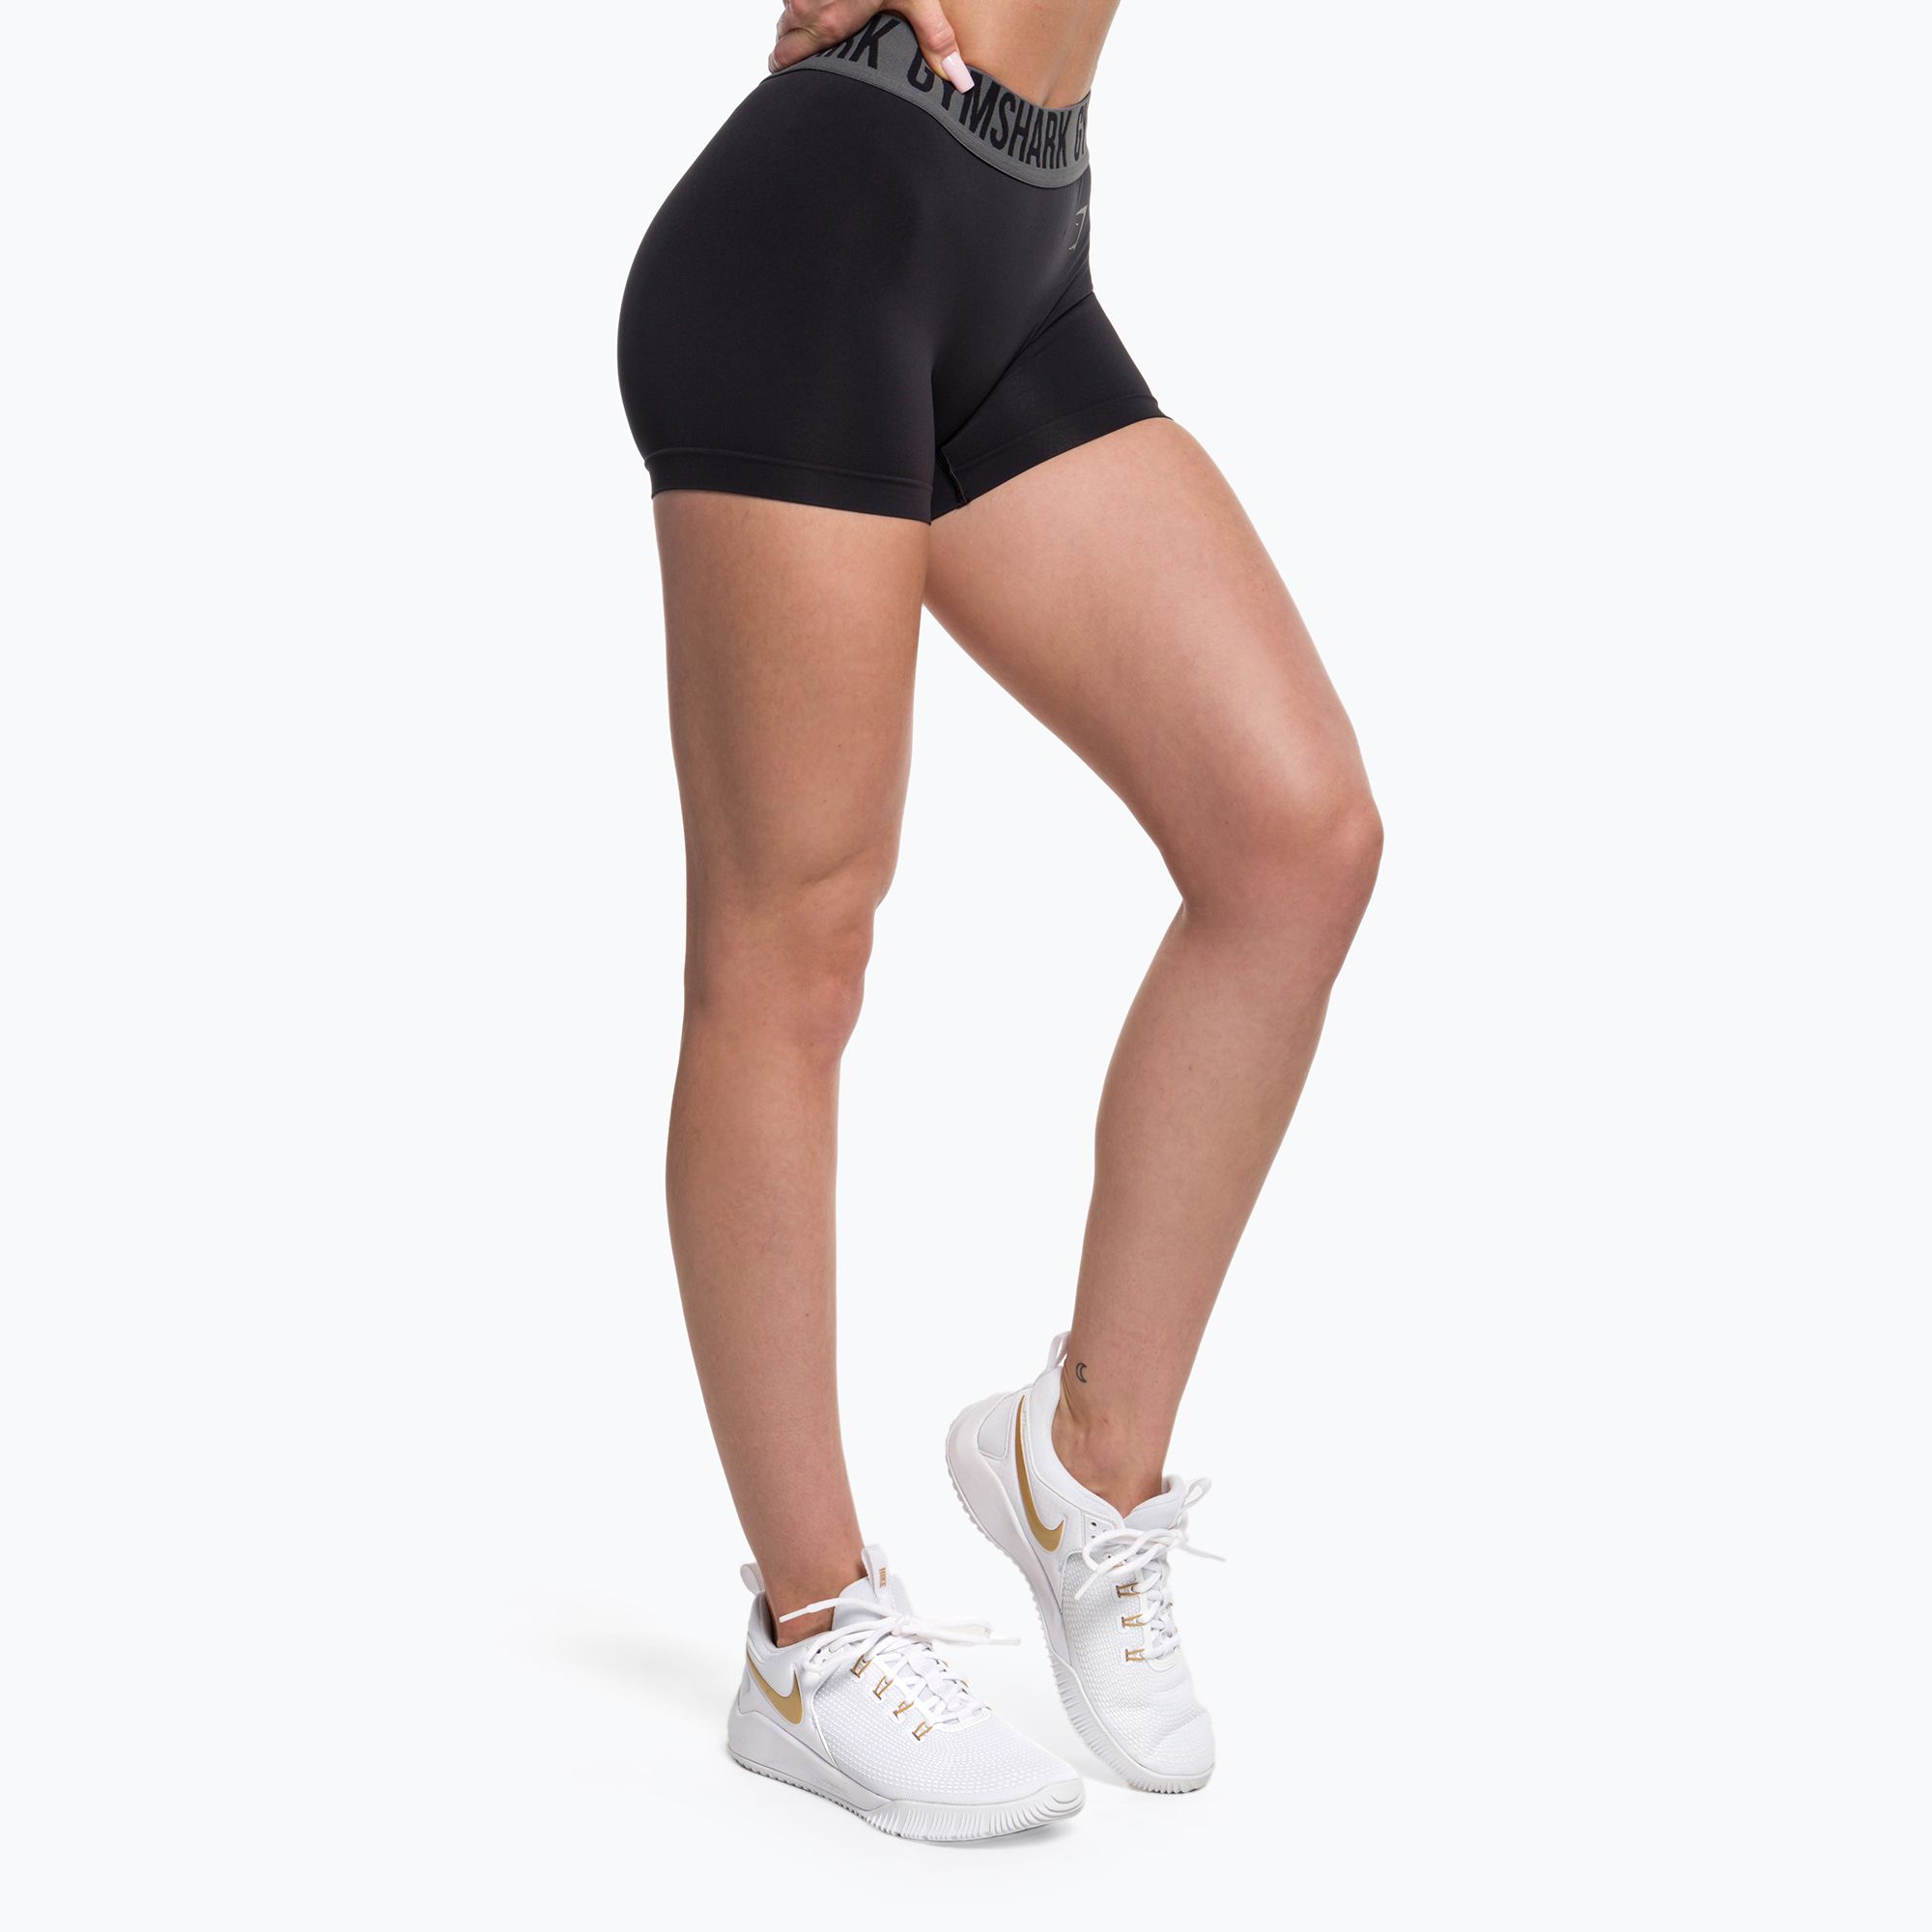 Women's training shorts Gymshark Fit black 